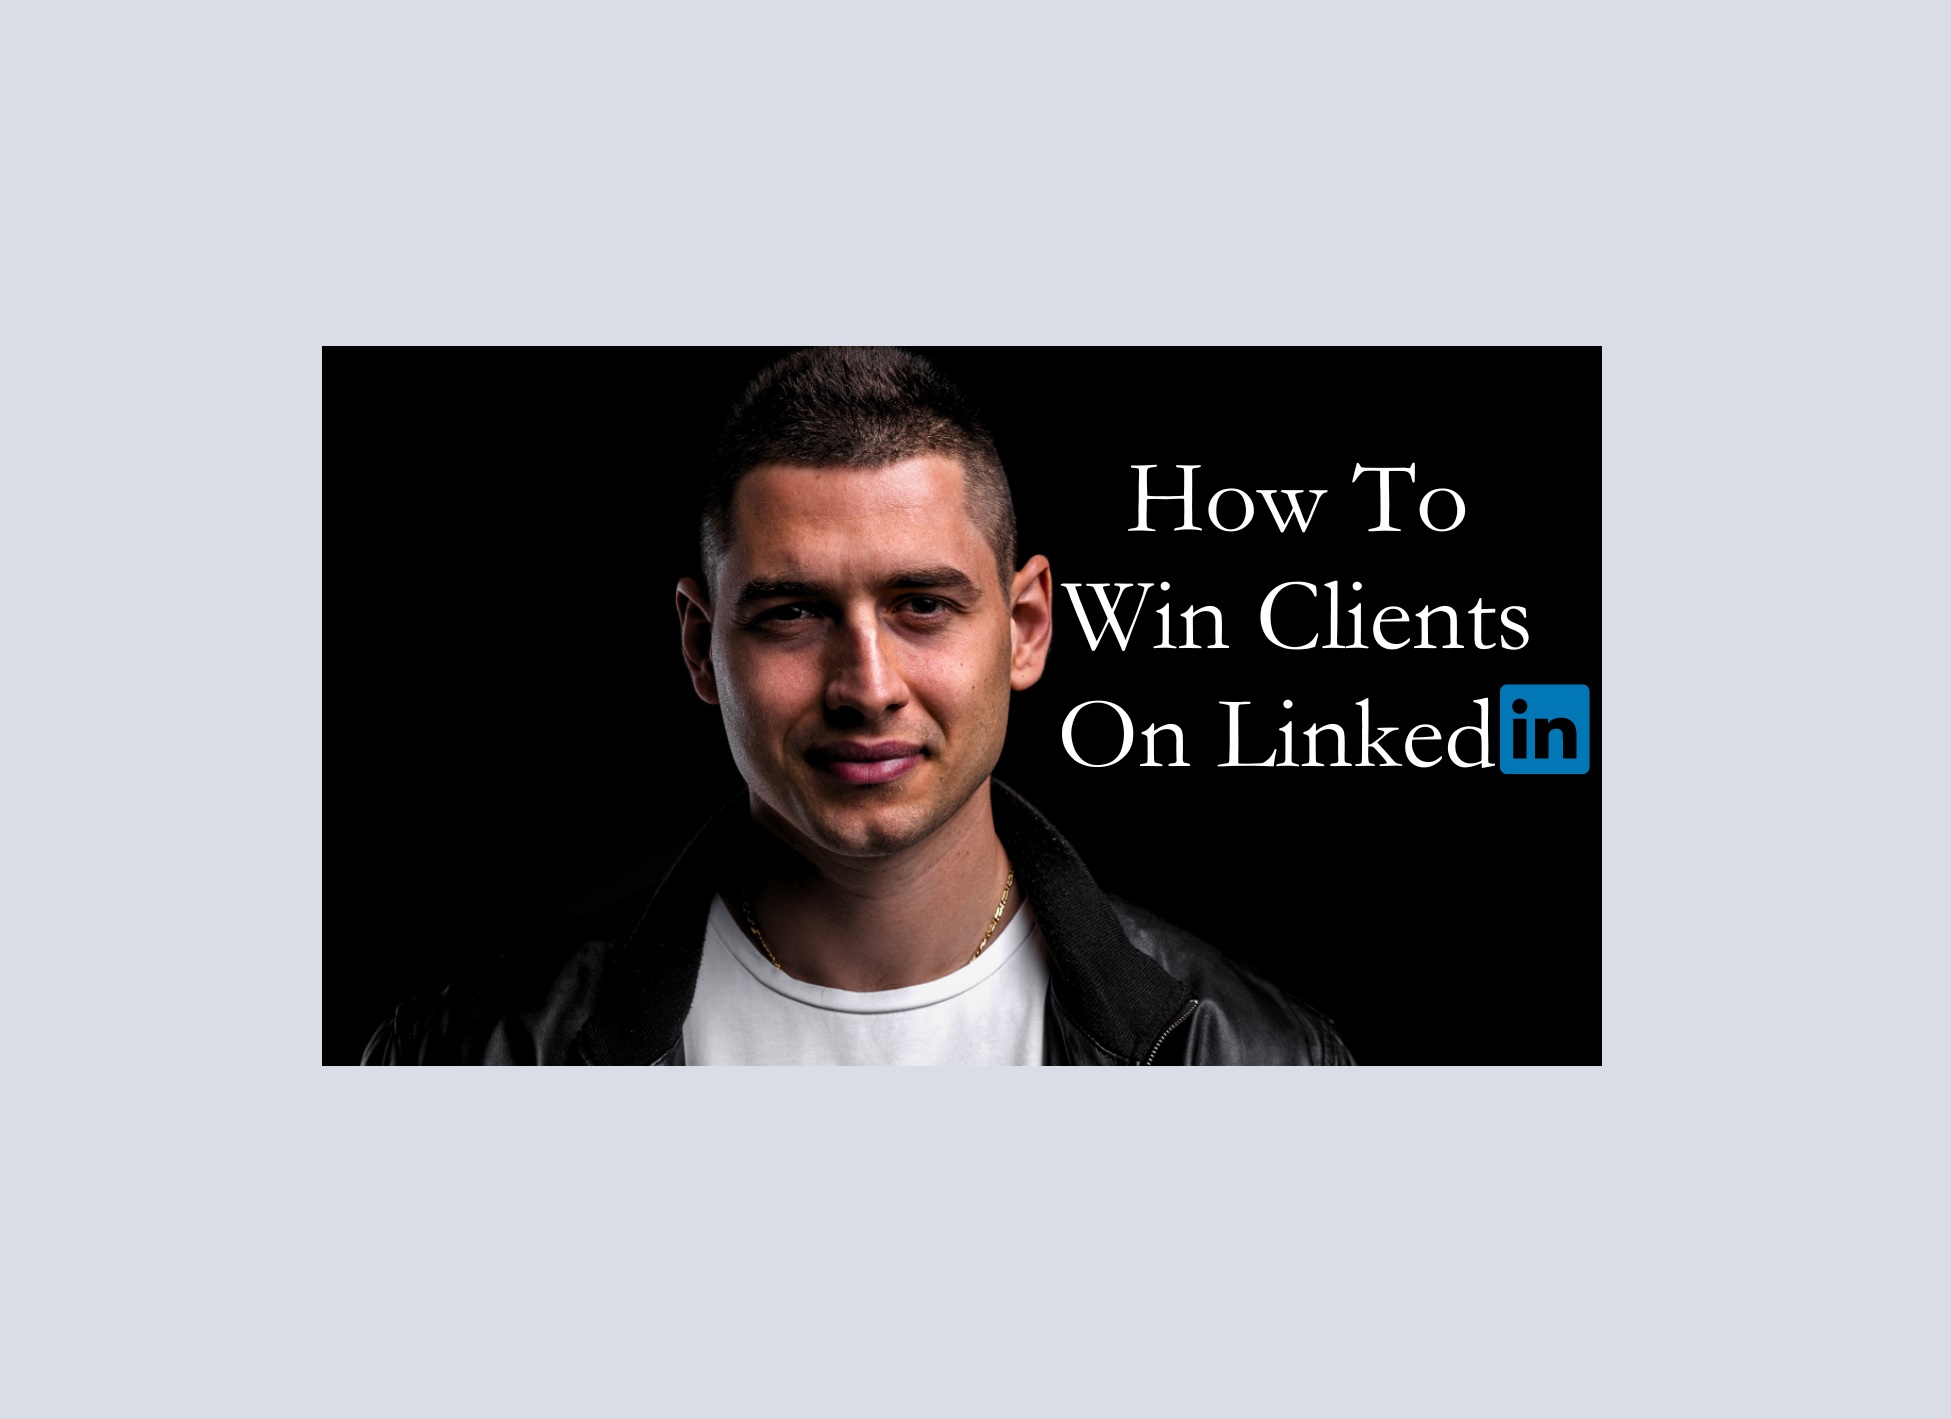 LinkedIn Expert Xhoni Mimillari Finally Reveals How To Get Clients On LinkedIn - Secrets 